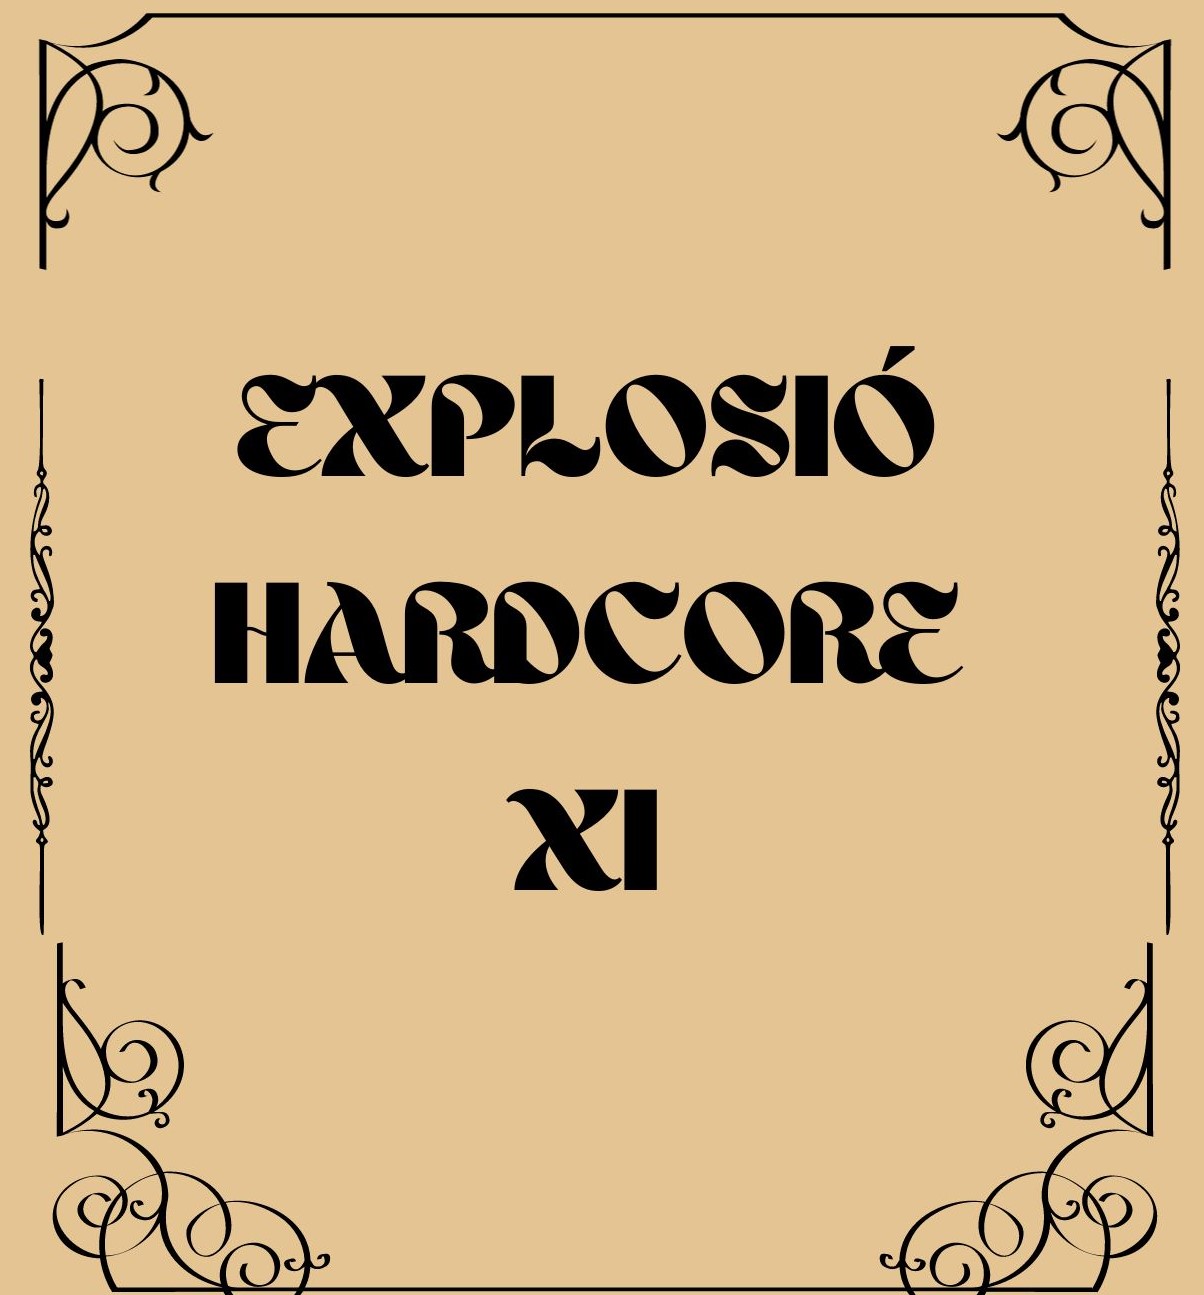 EXPLOSIÓ HARDCORE XI – 1